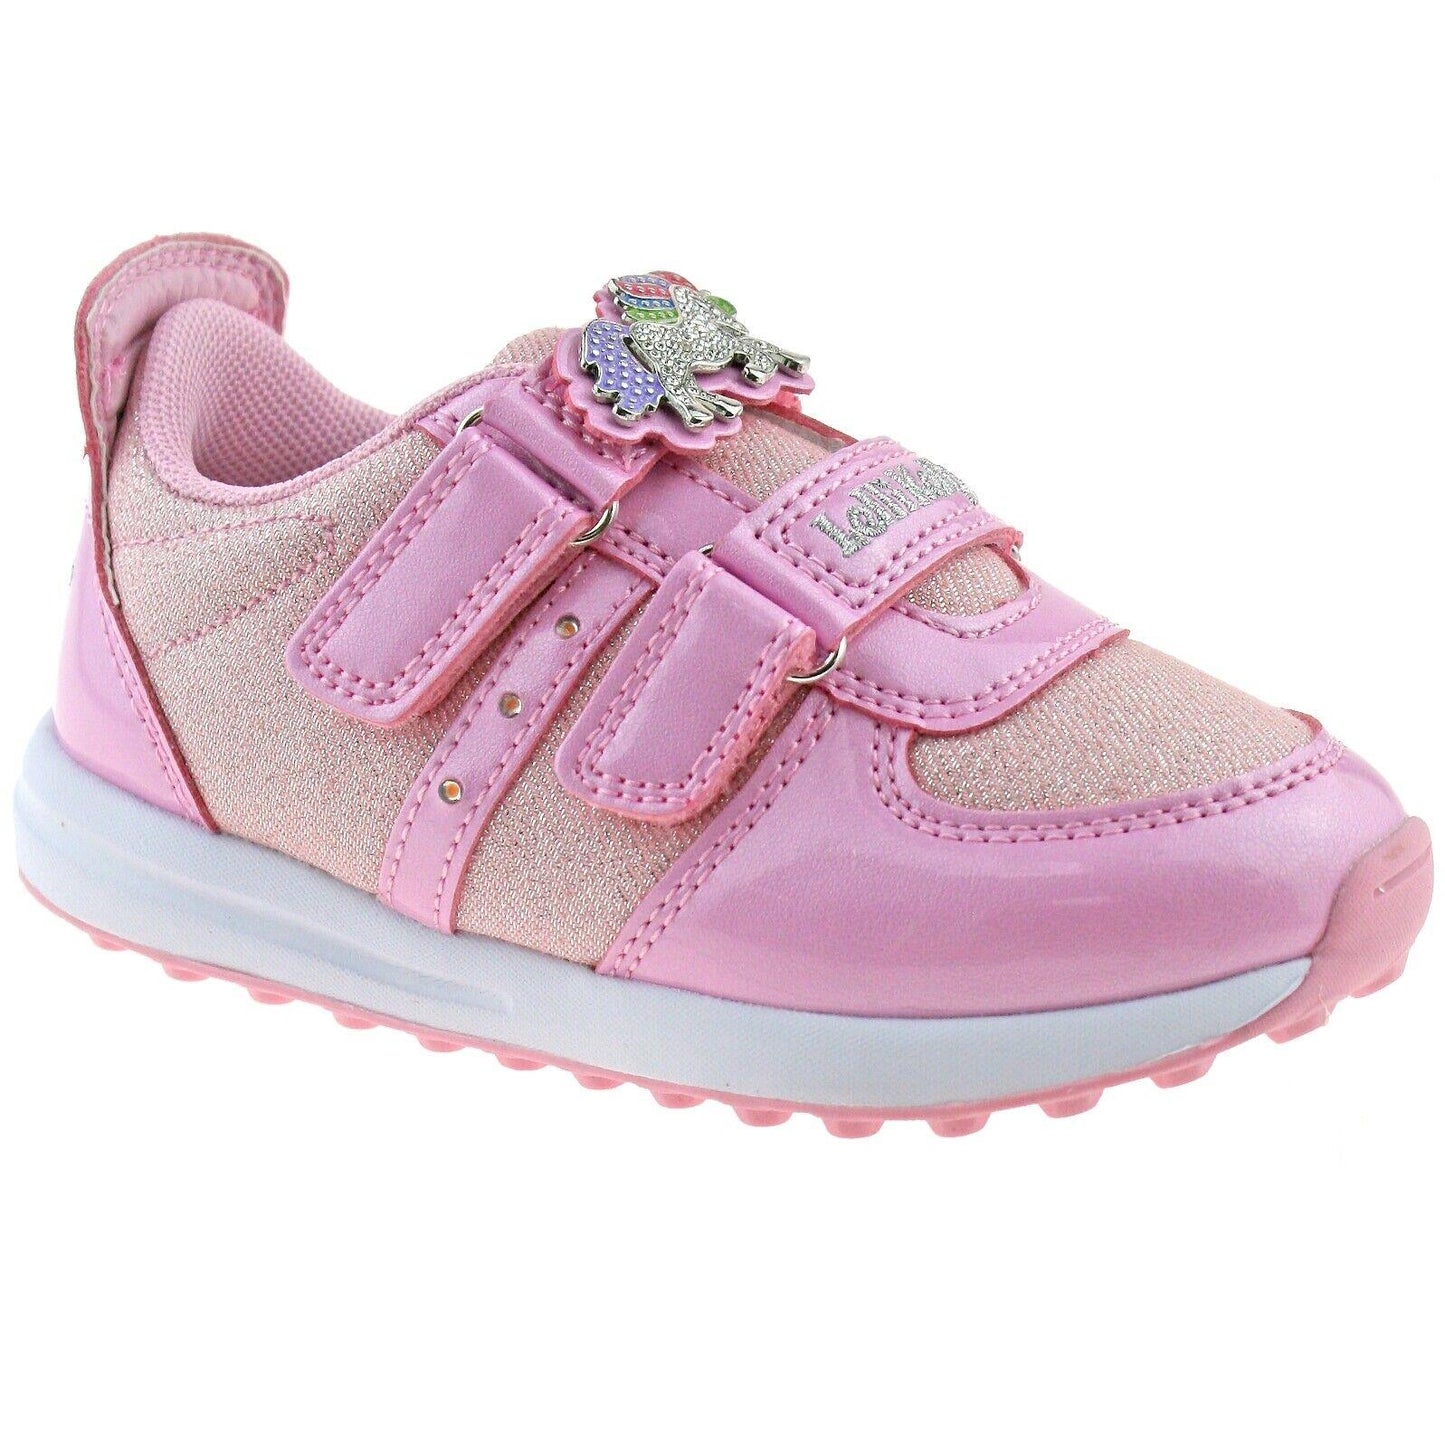 Lelli Kelly LK7853 (AC41) Colorissima Lights Rosa Pink Unicorn Adjustable Shoes